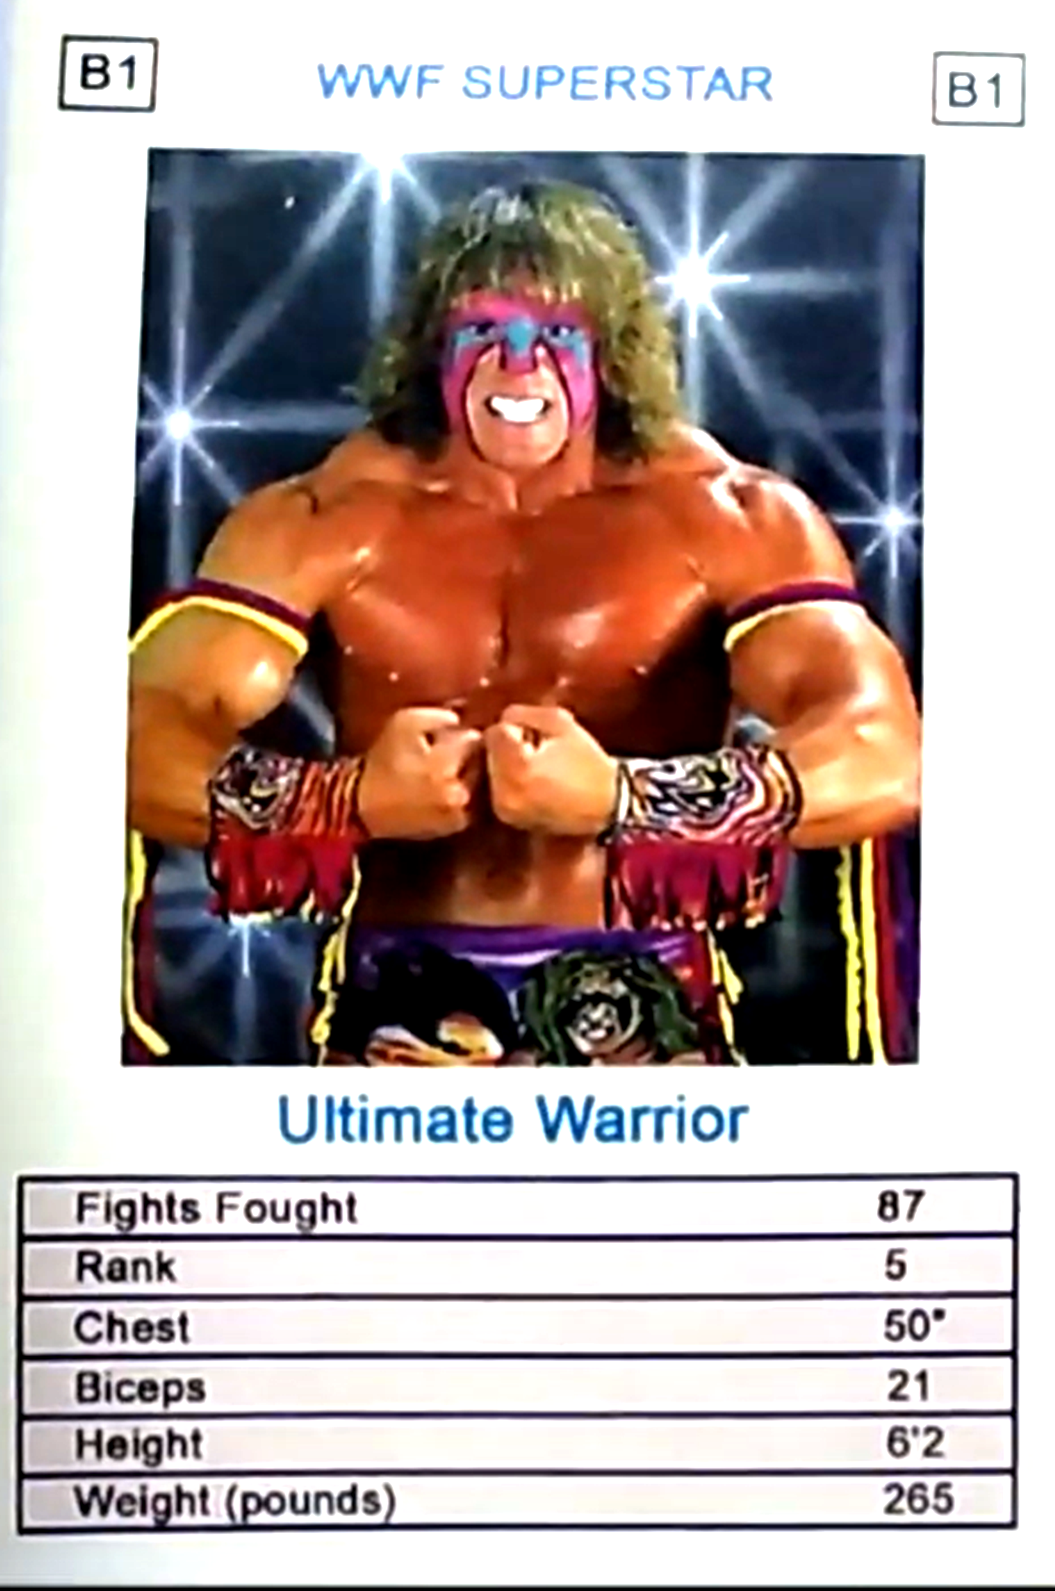 1995 WWF Universal Trump Cards (India) Ultimate Warrior